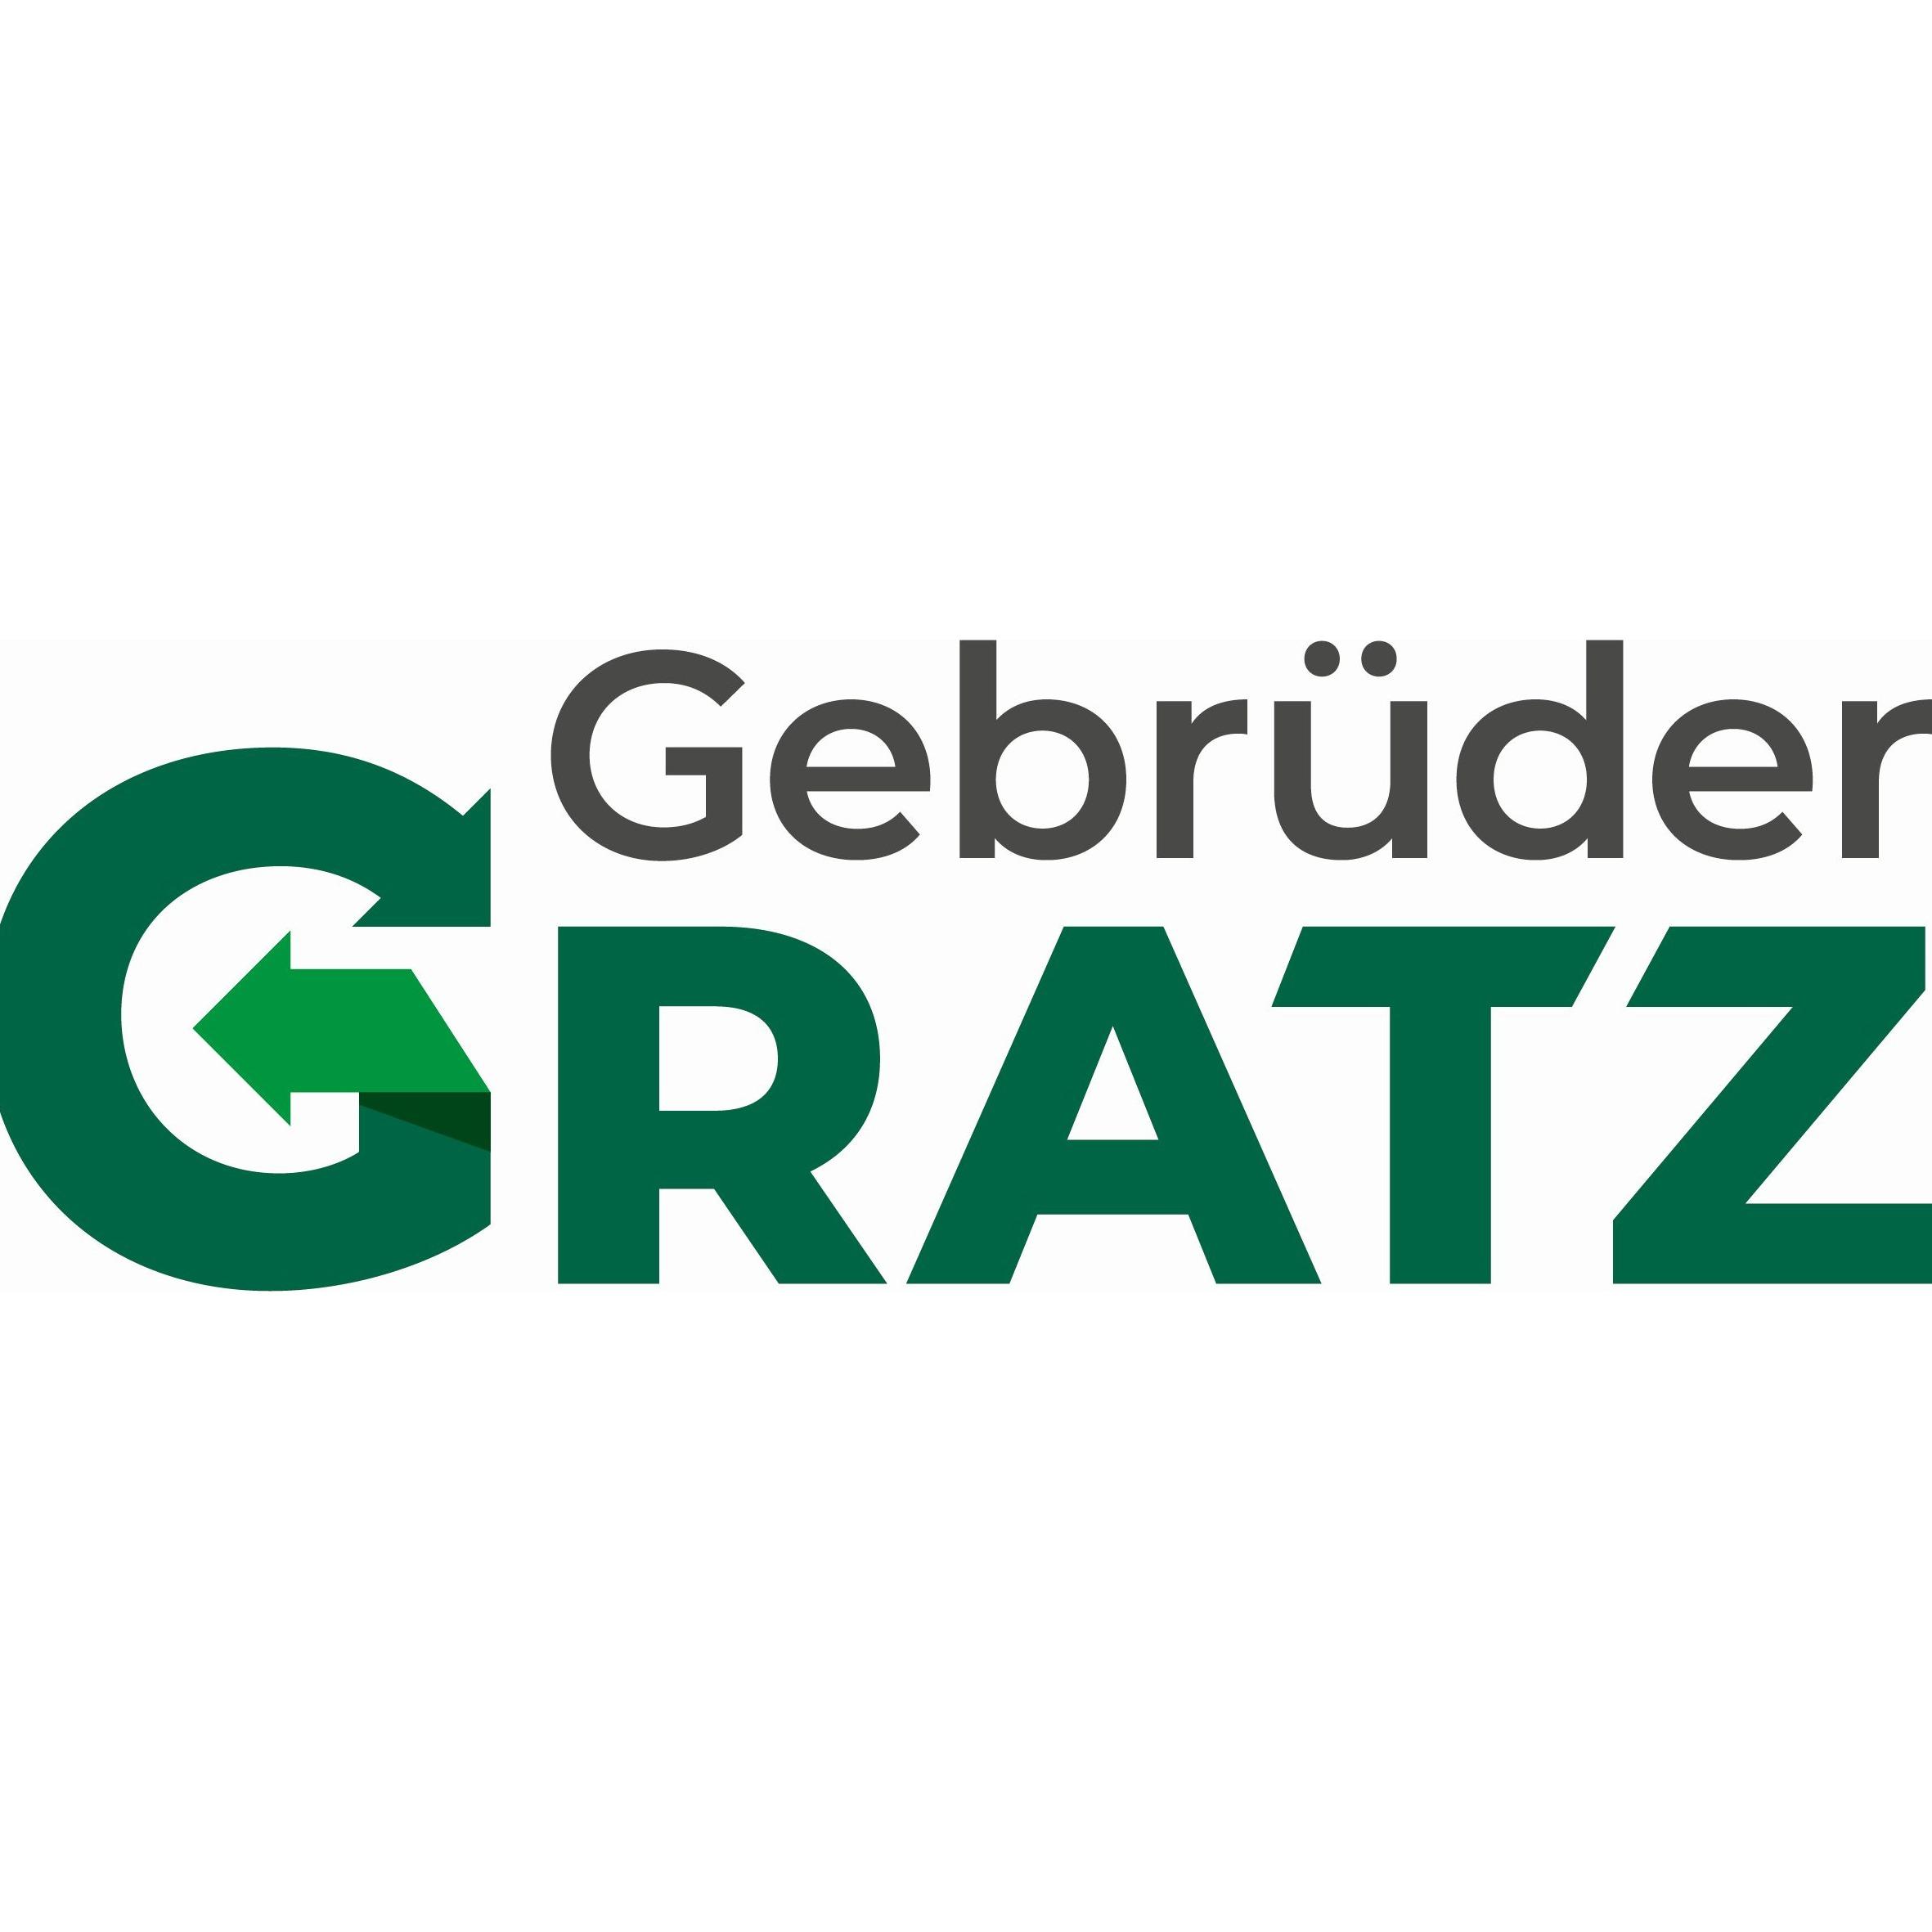 Gratz Gebrüder GesmbH Logo